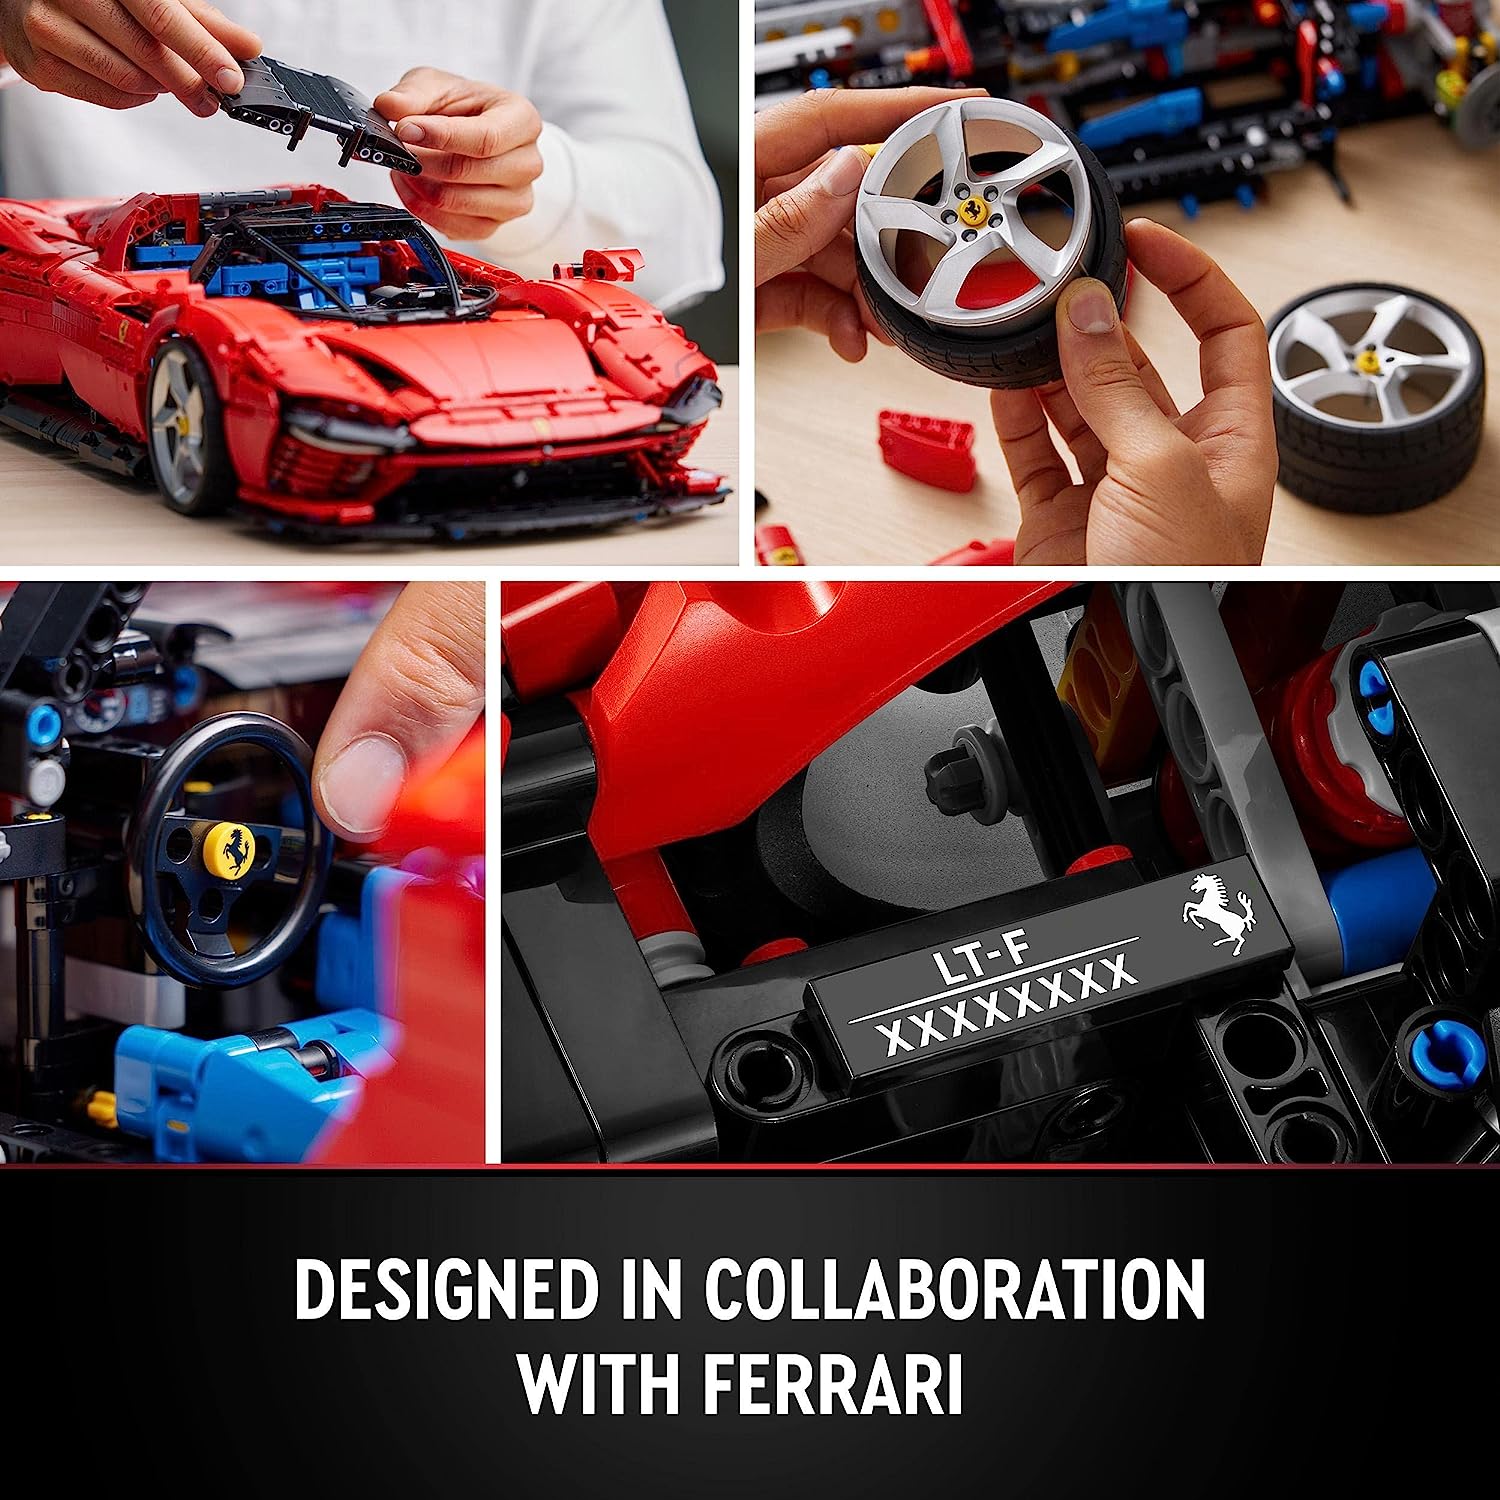 LEGO 42143 Technic Ferrari Daytona SP3 - New